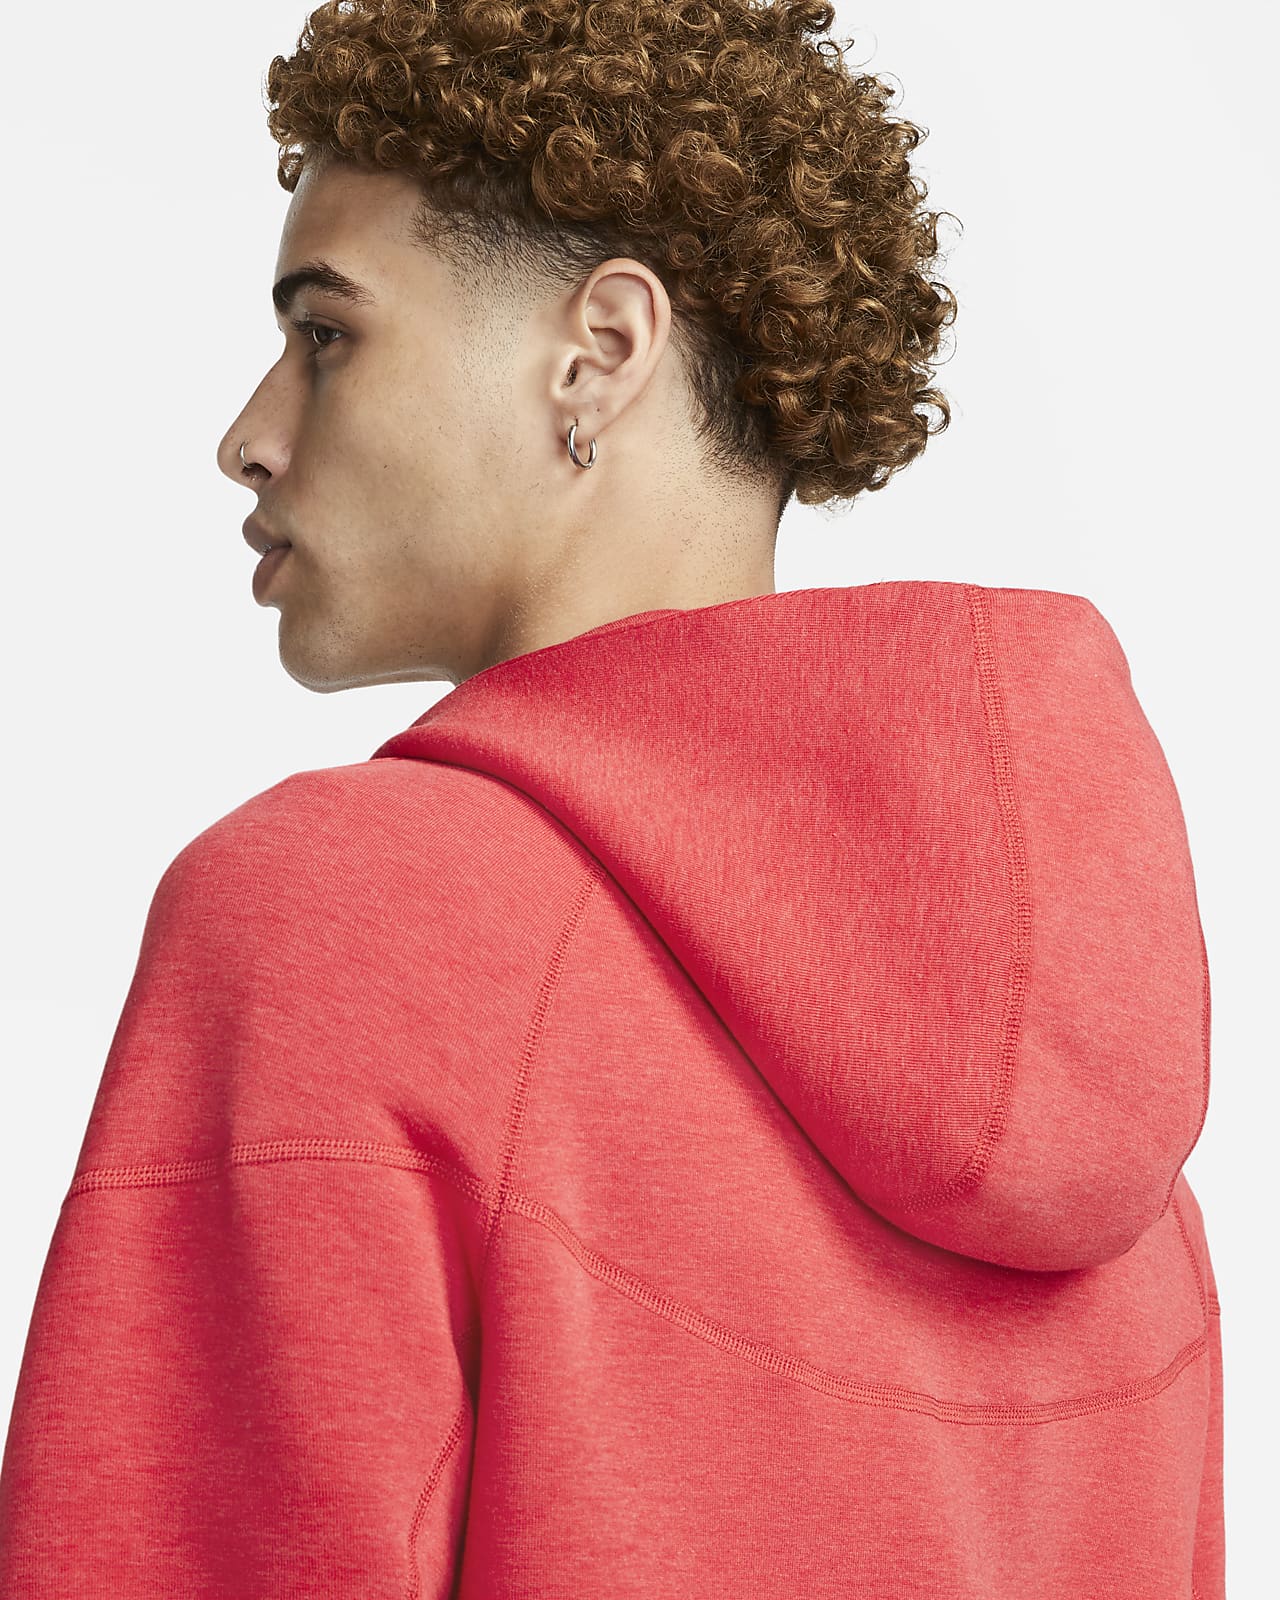 Red Tech Fleece Clothing. Nike SI